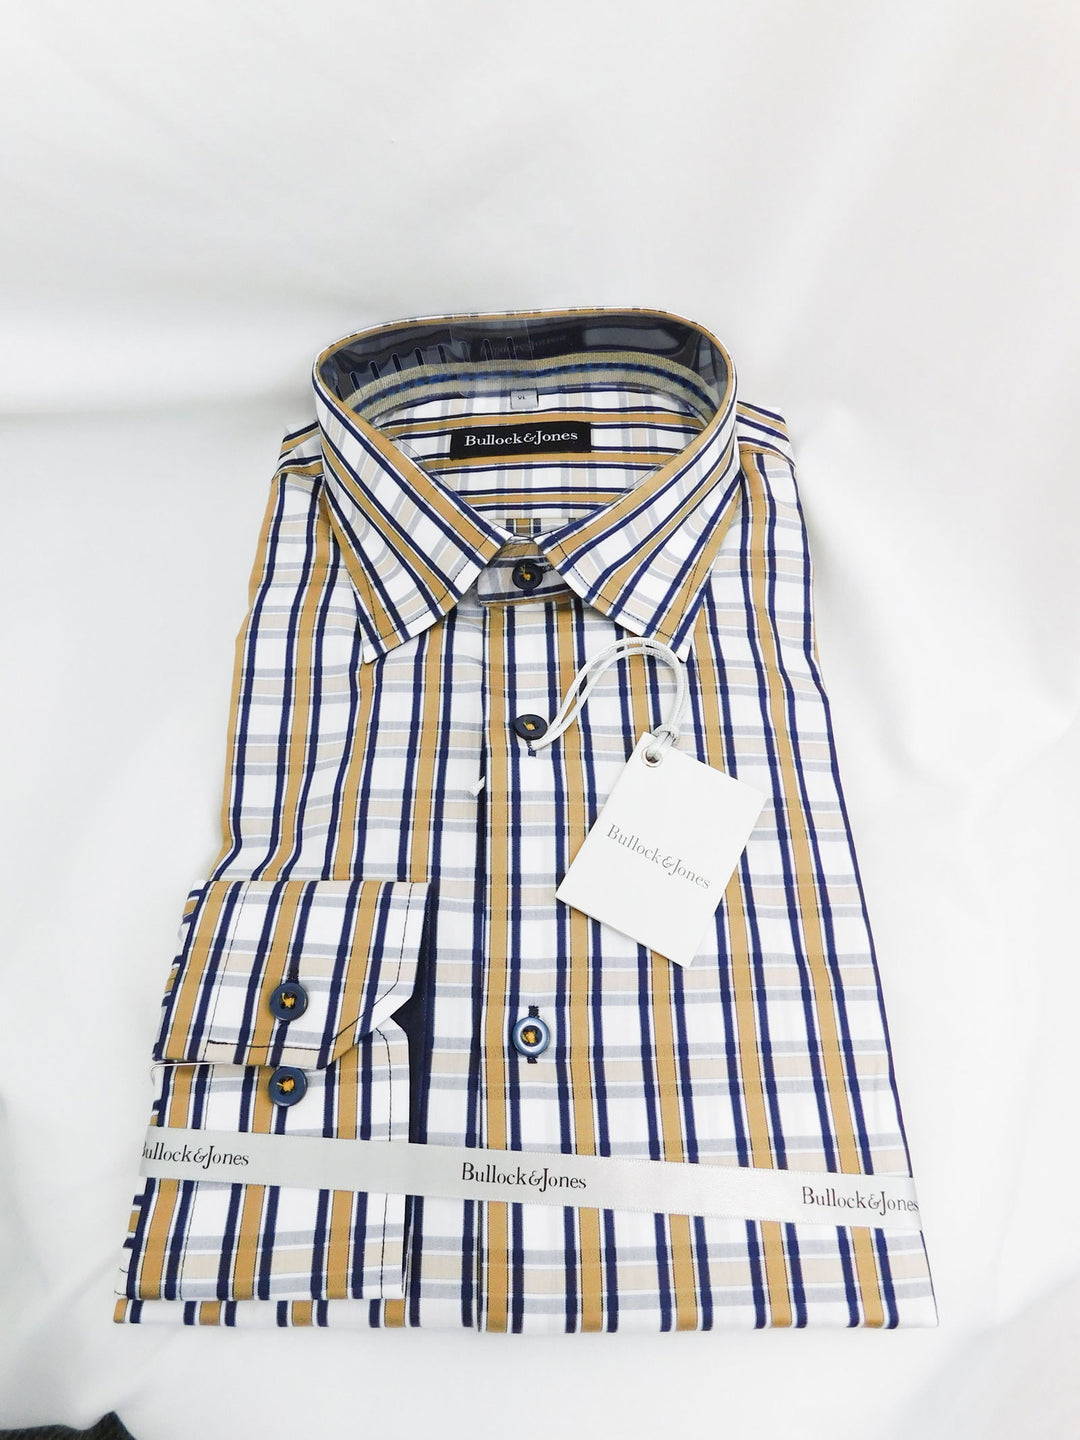 Bullock & Jones Plaid Shirt - Size XL - The Kennedy Collective Thrift - 